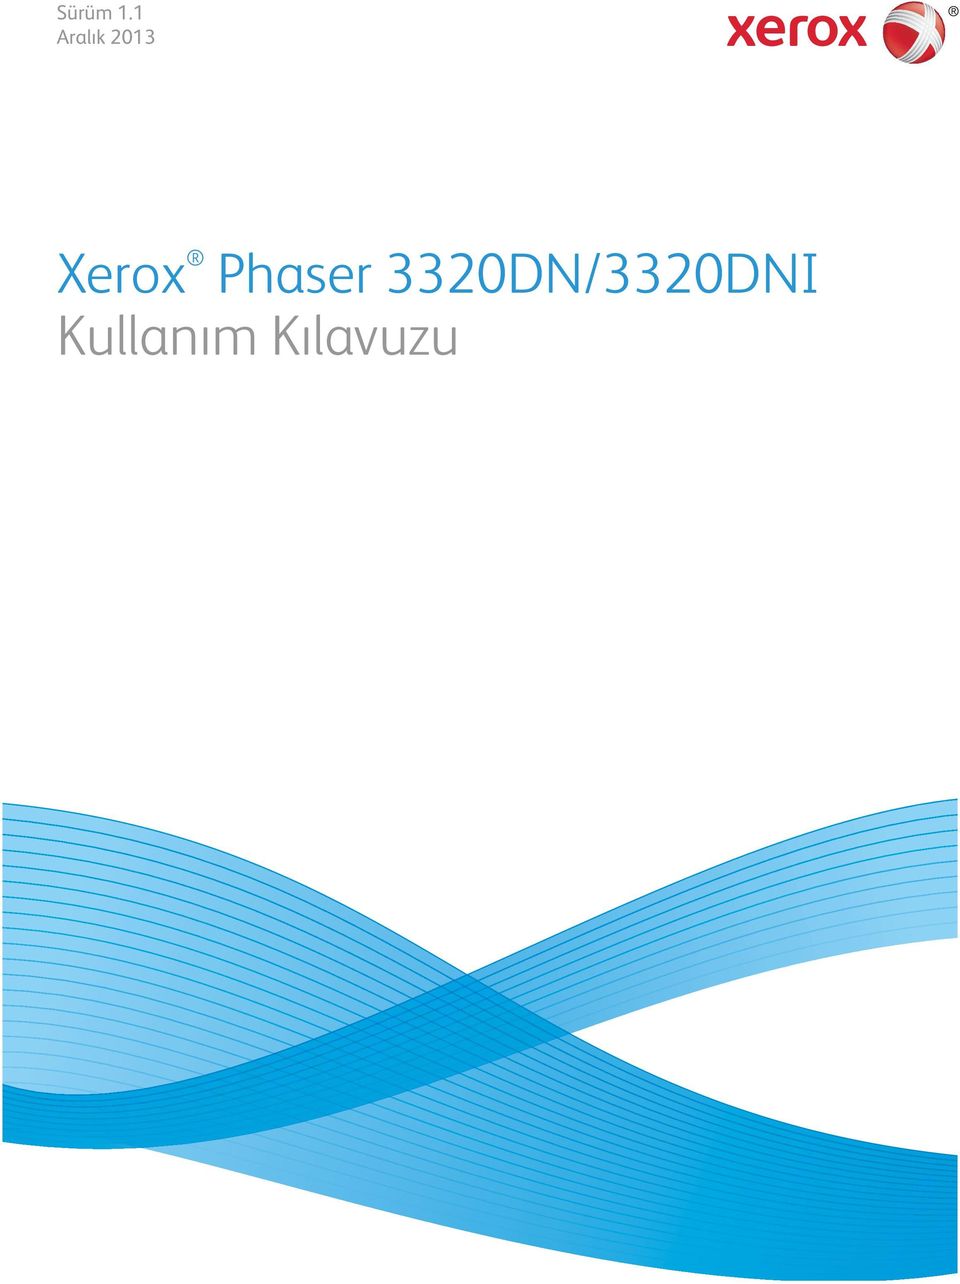 2013 Xerox